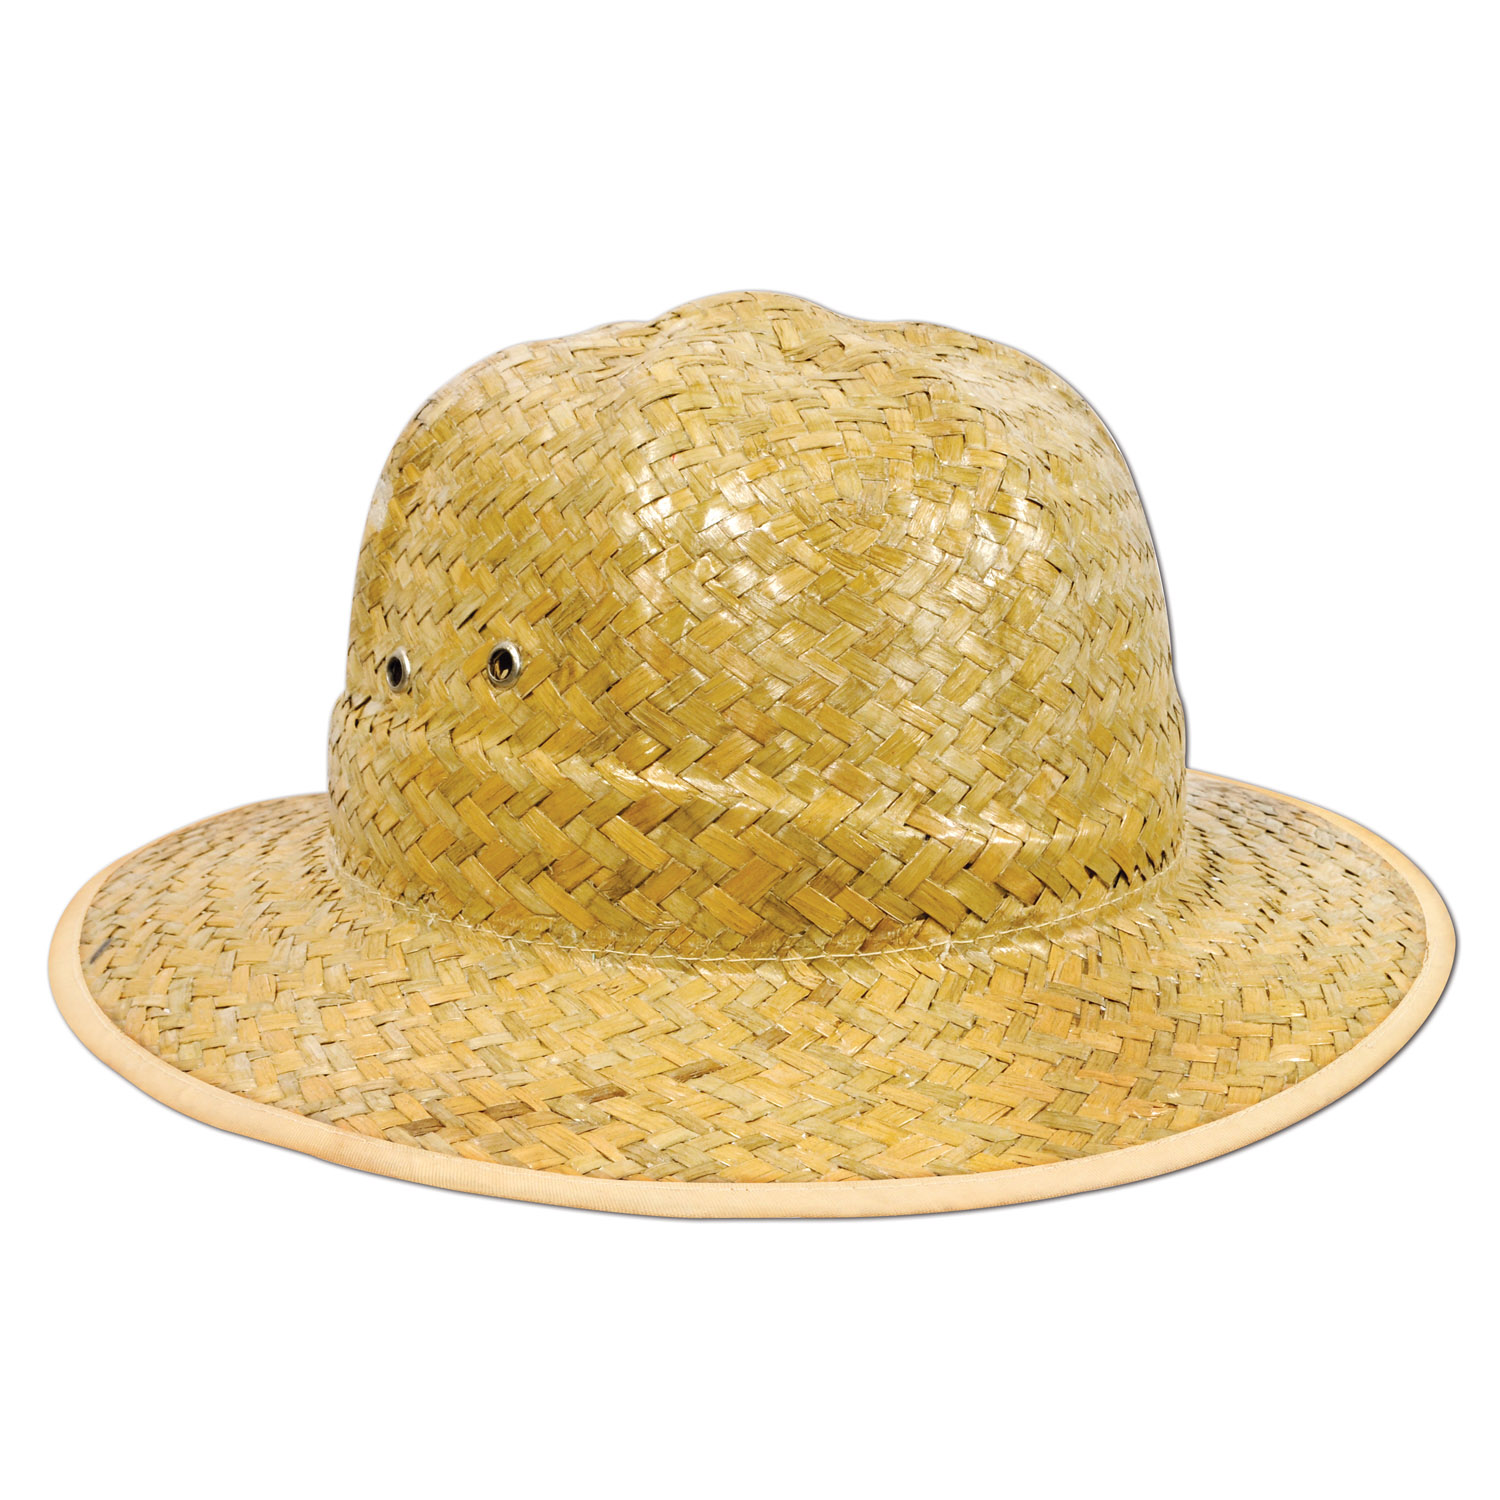 Safari Straw Hat (one size fits most) - Webhats.com